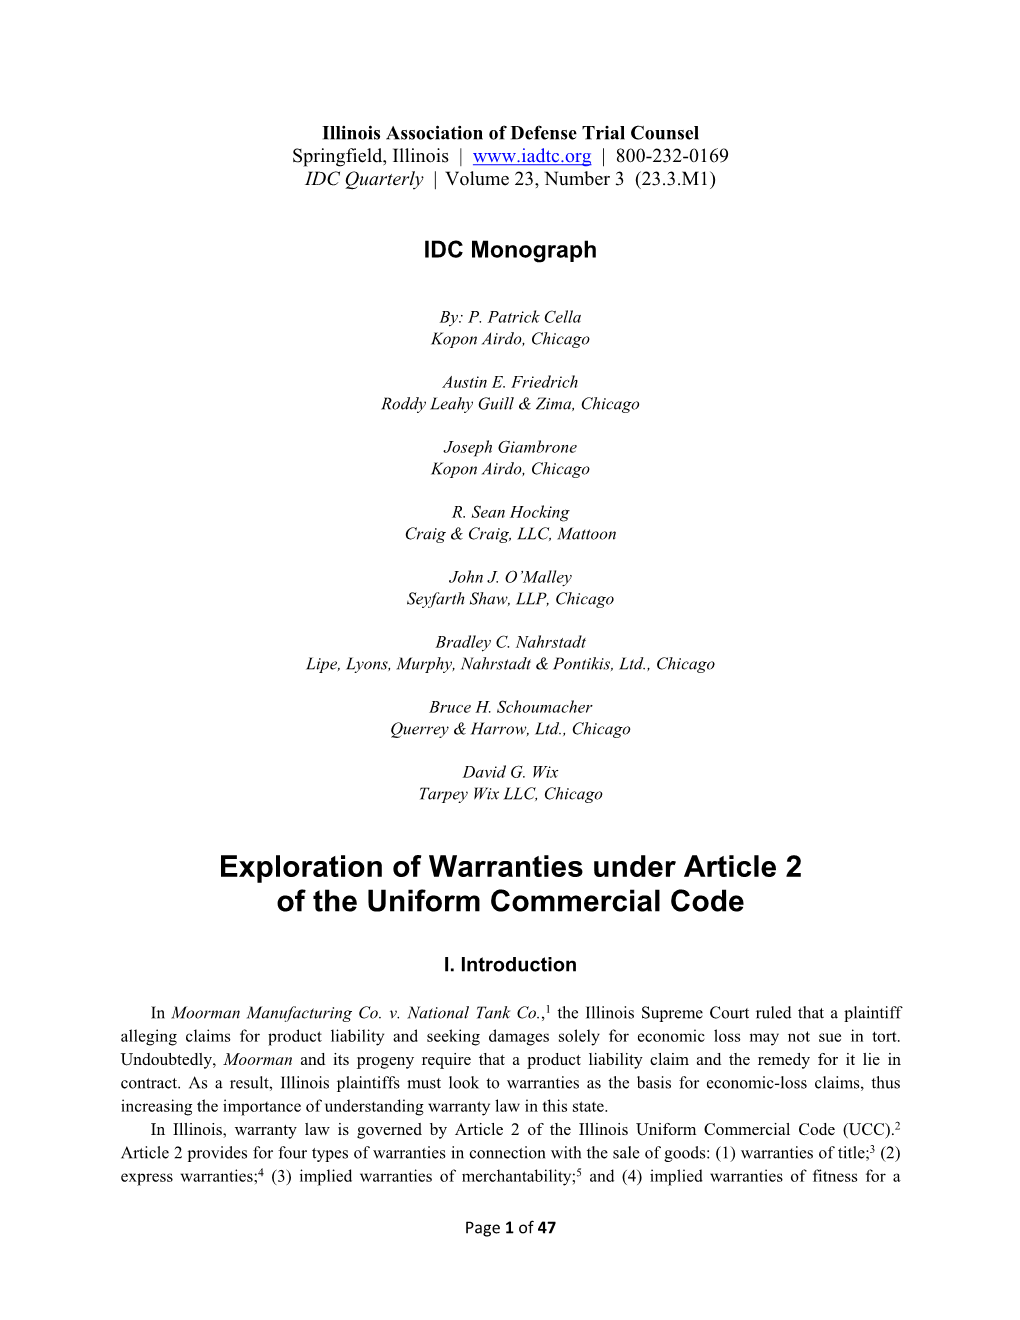 Exploration of Warranties Under Article 2 of the Uniform Commercial Code